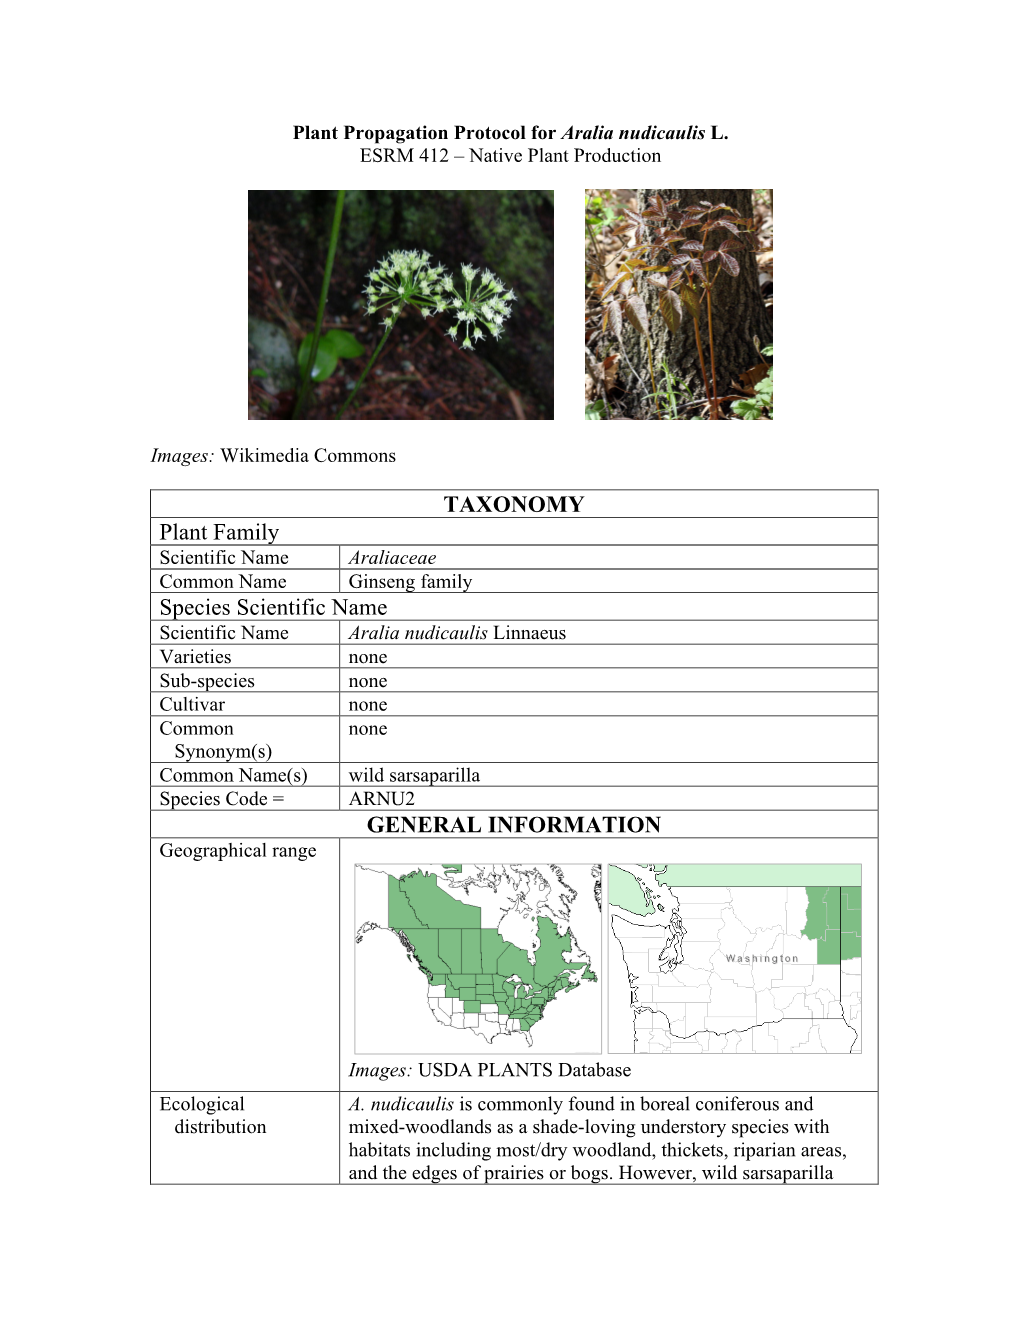 TAXONOMY Plant Family Species Scientific Name GENERAL